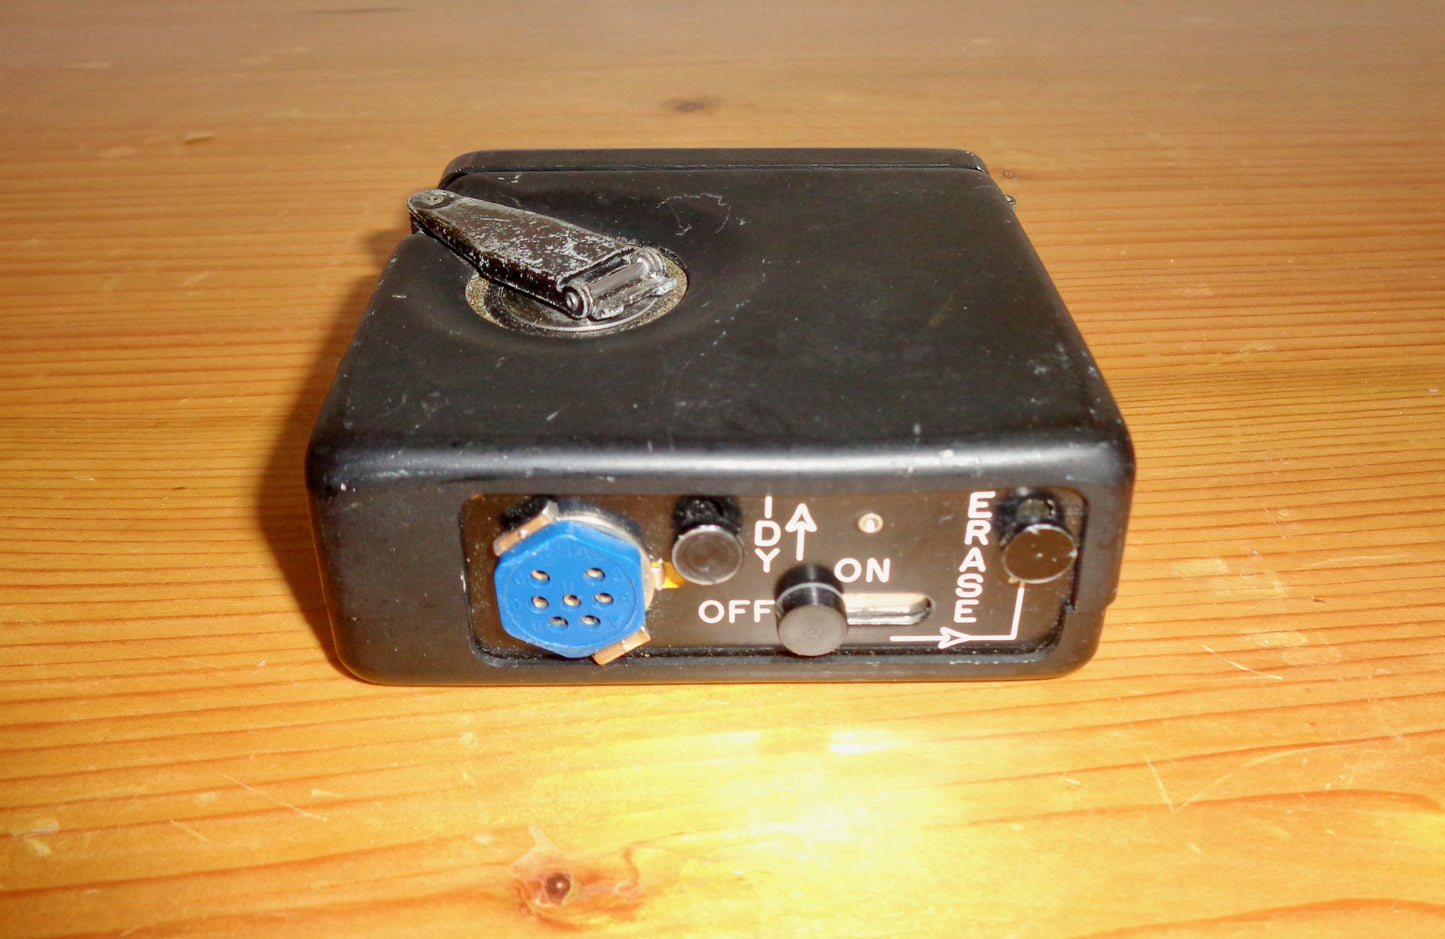 1960s Morse High Speed Military Keyer KY468 / GRA71. An Electromechanical Burst Encoder Morse Key